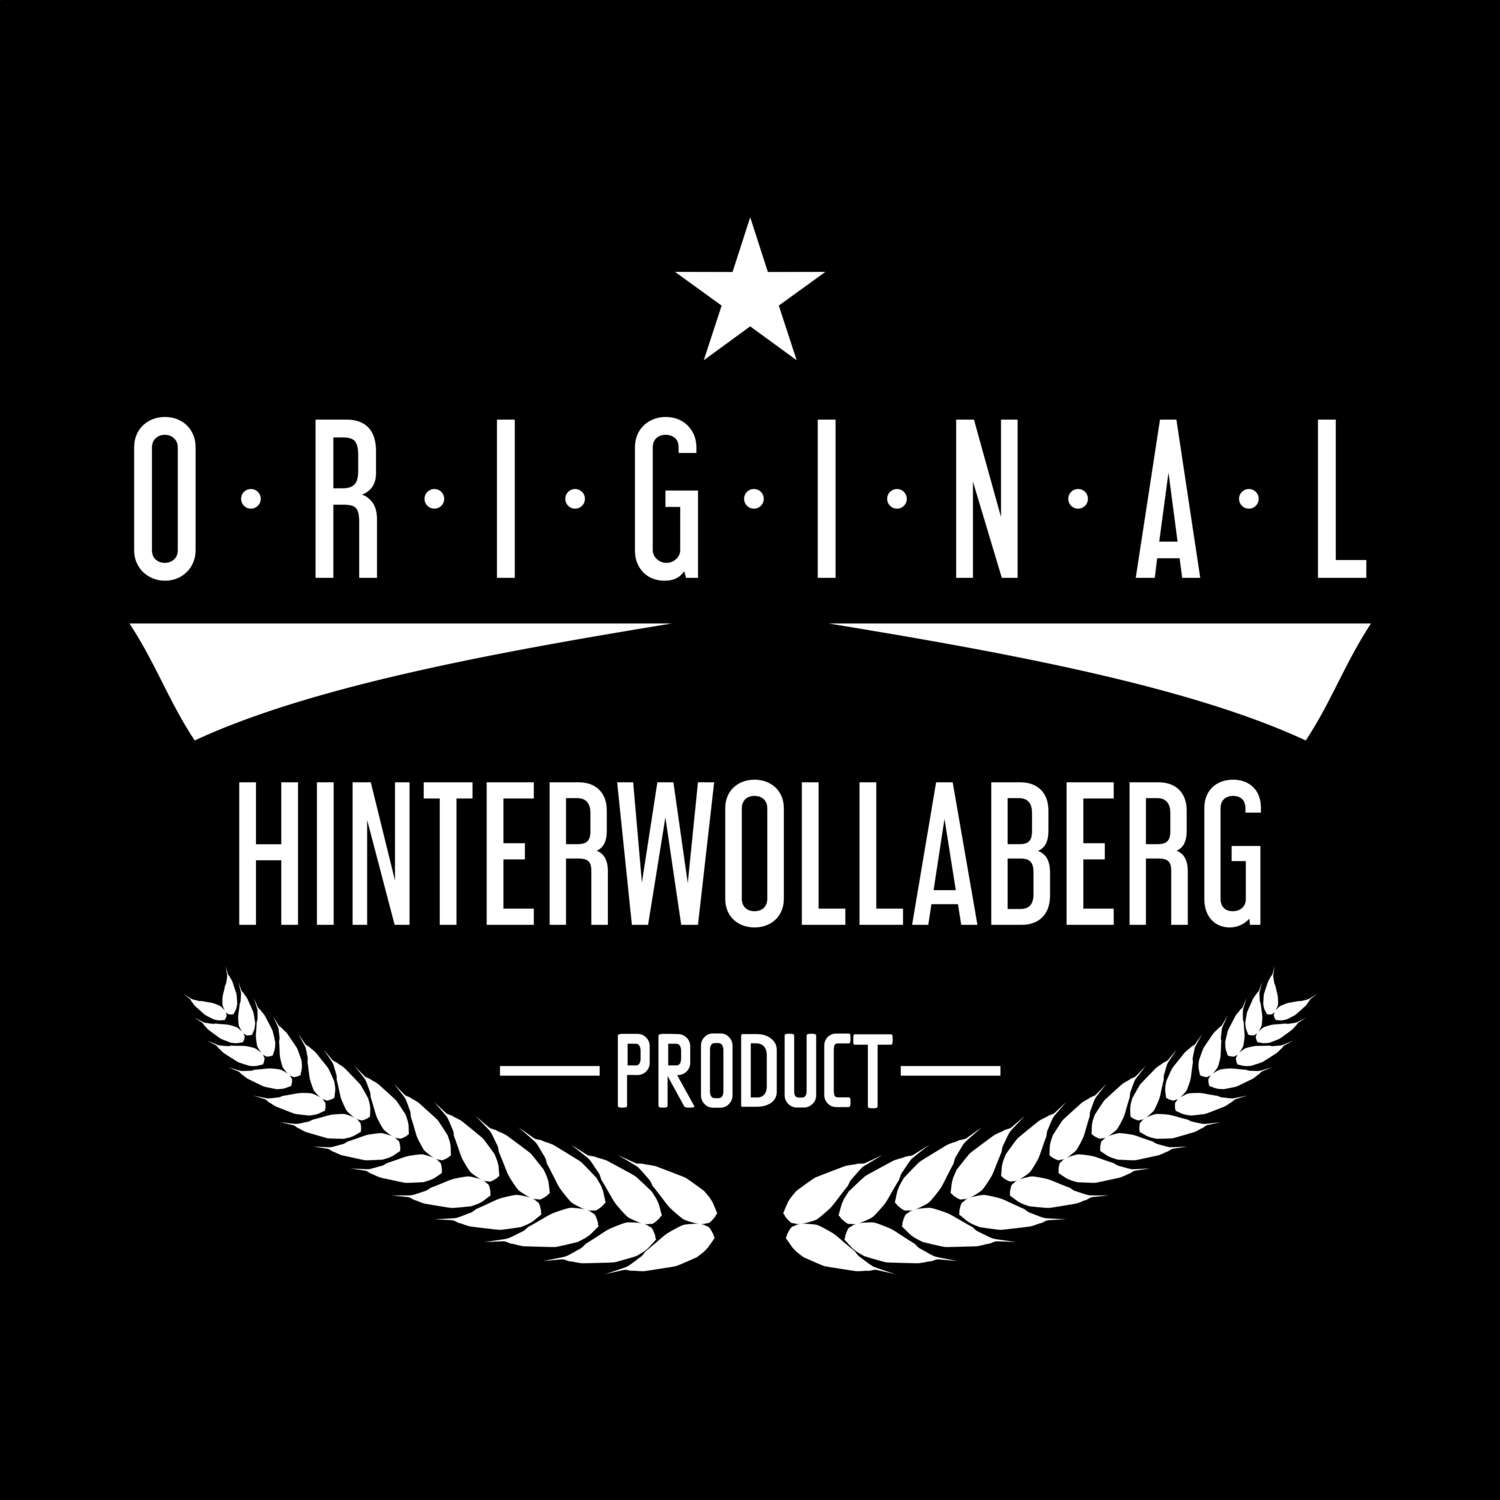 Hinterwollaberg T-Shirt »Original Product«